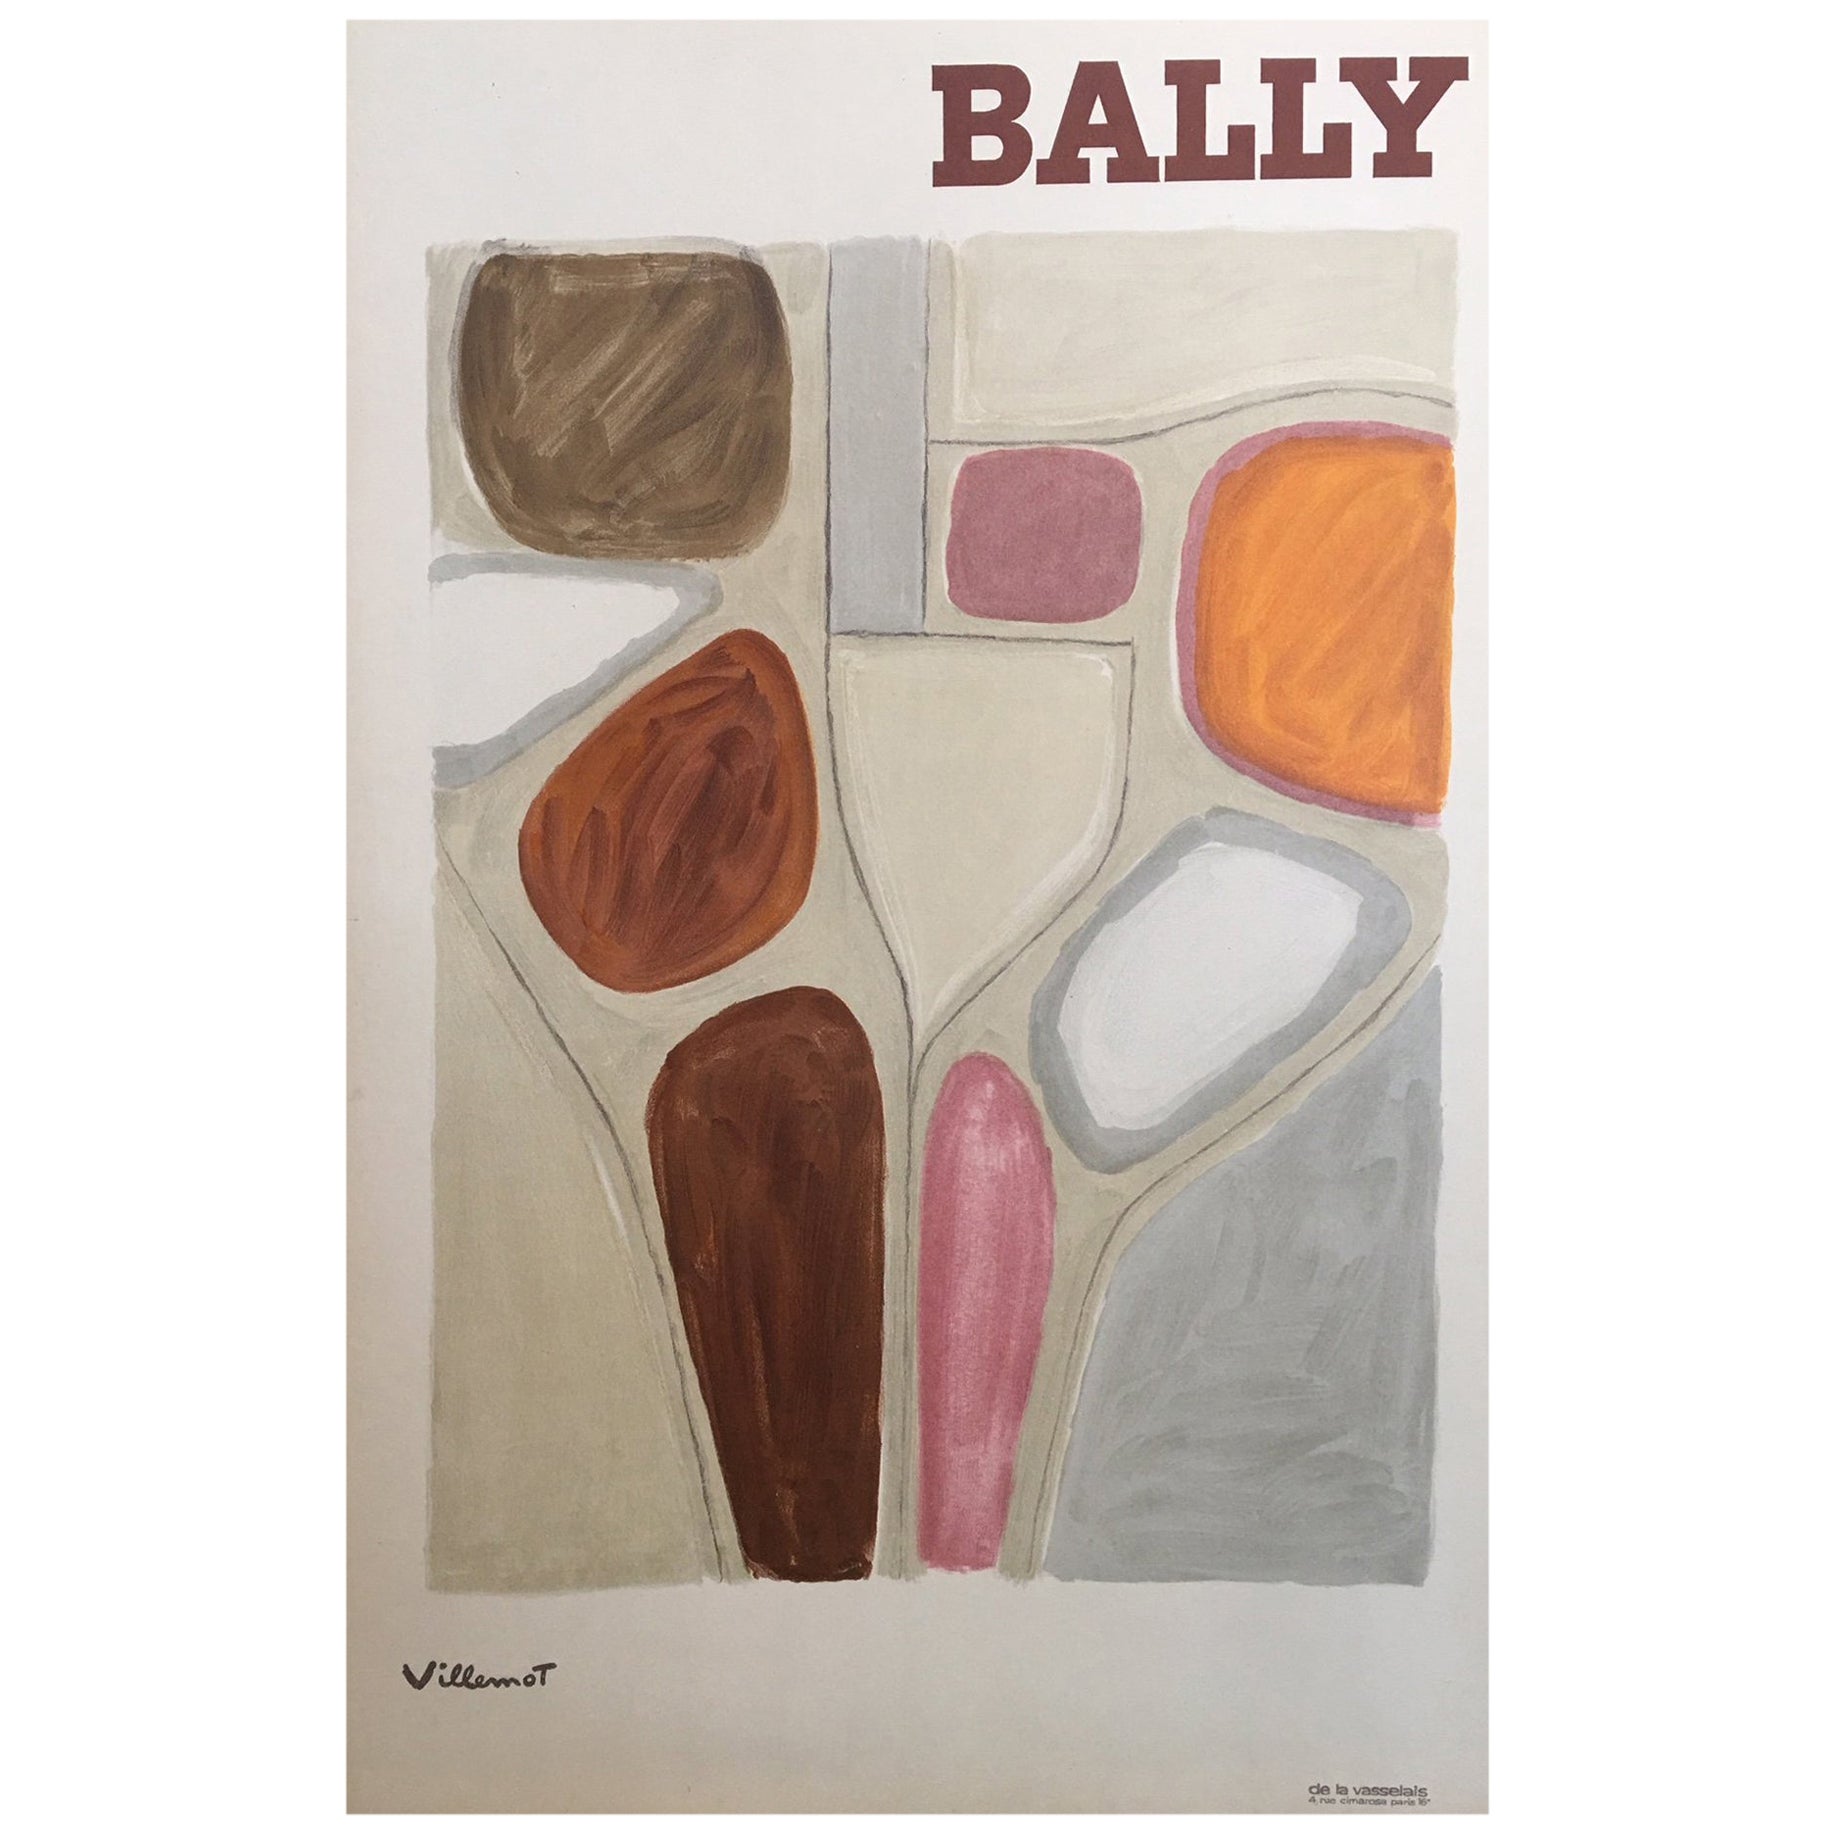 Bally Ball, Original Vintage Bally Shoes Advertising Poster by Bernard ...